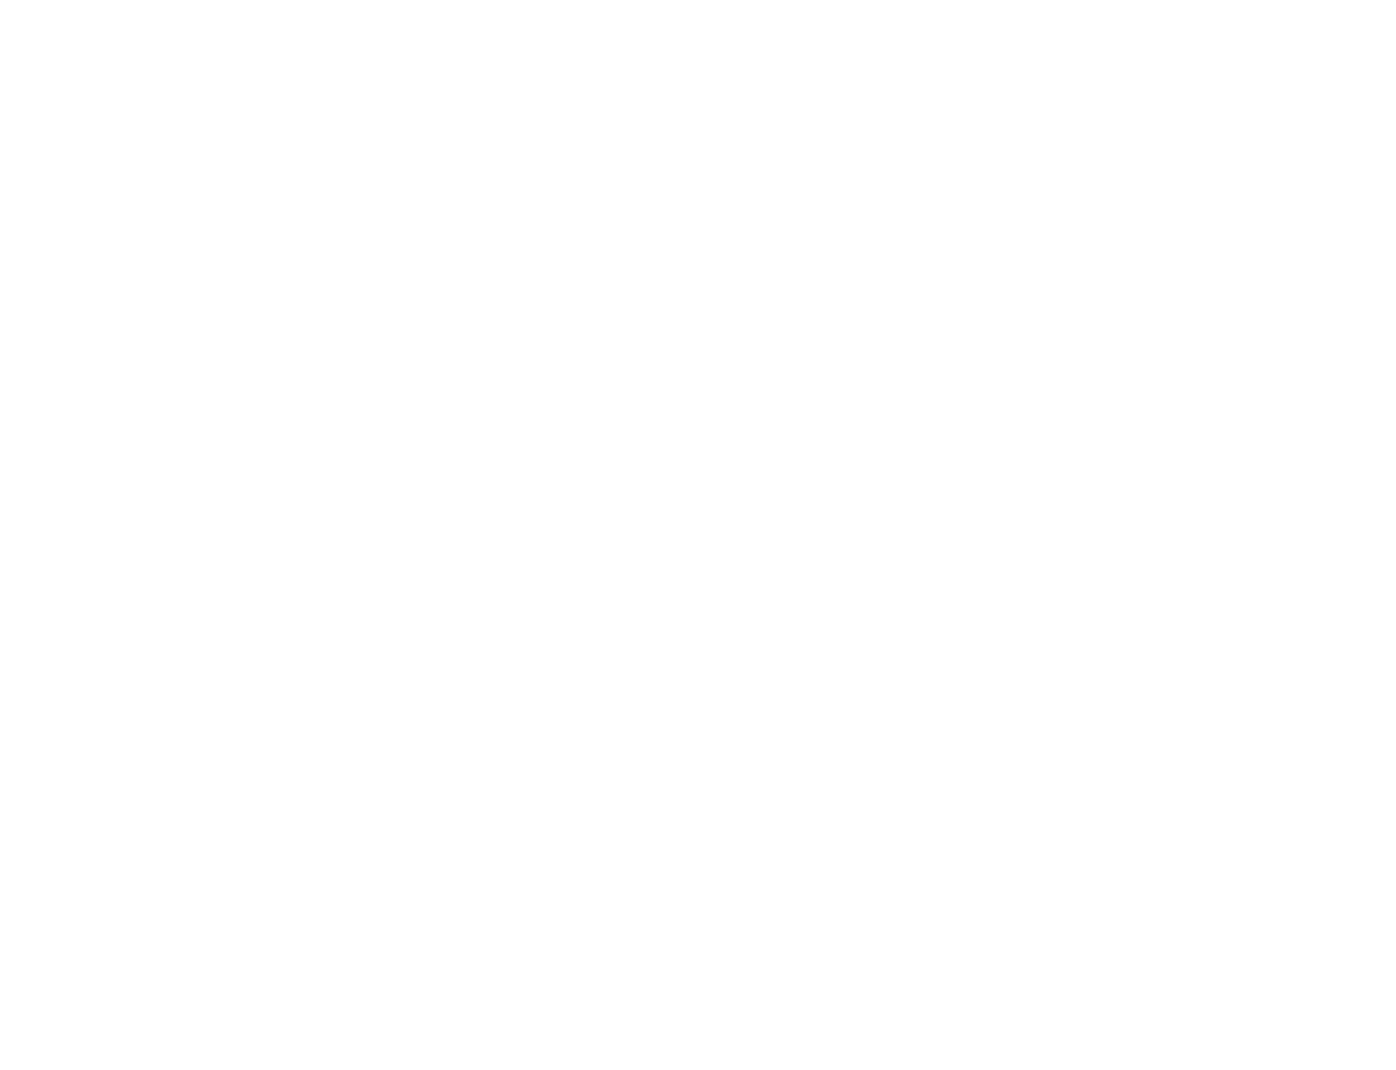 Discord logo for dark backgrounds (transparent PNG)